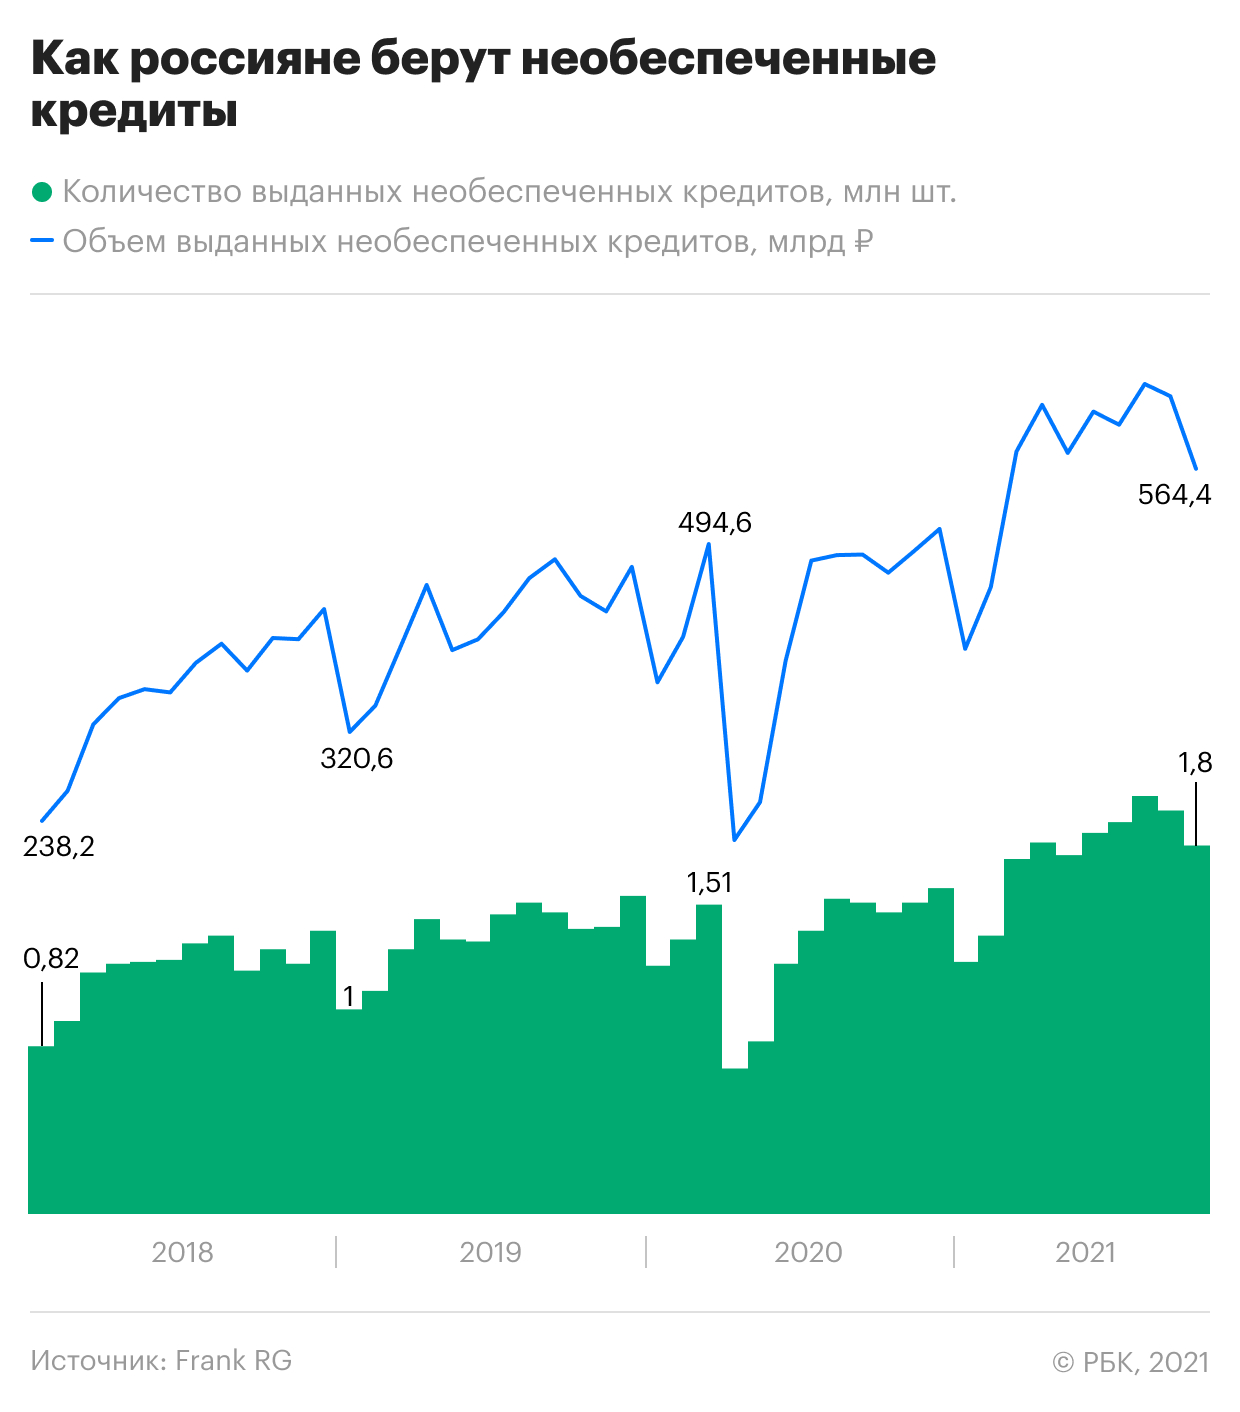 Выдачи кредитов россиянам резко упали на фоне роста заболеваемости COVID